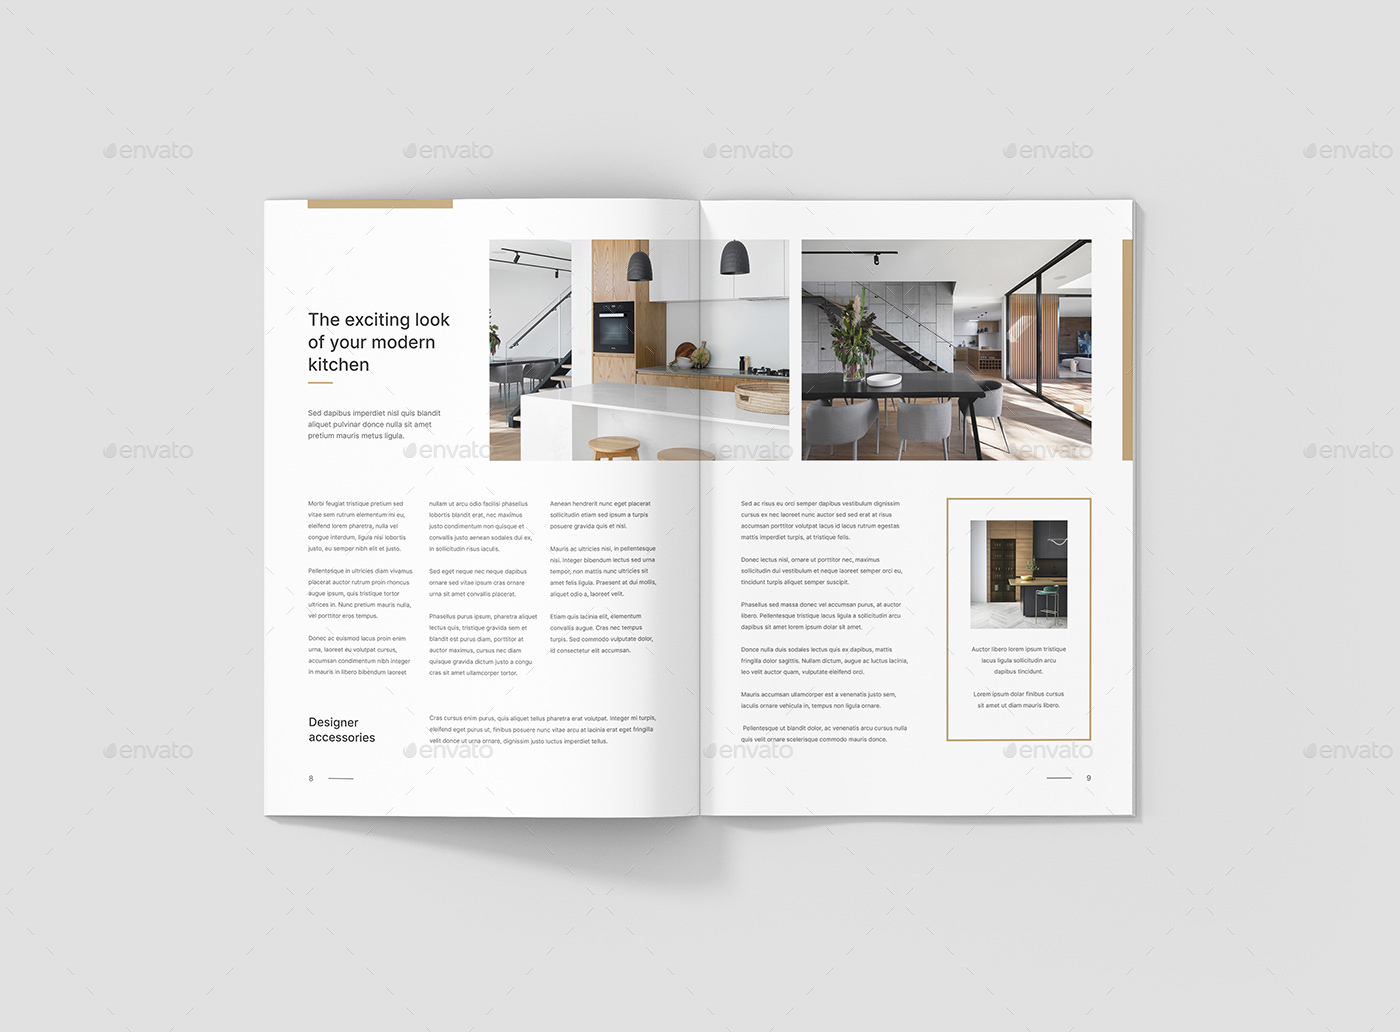 Interiorch Architecture And Interior Design Magazine By Artbart